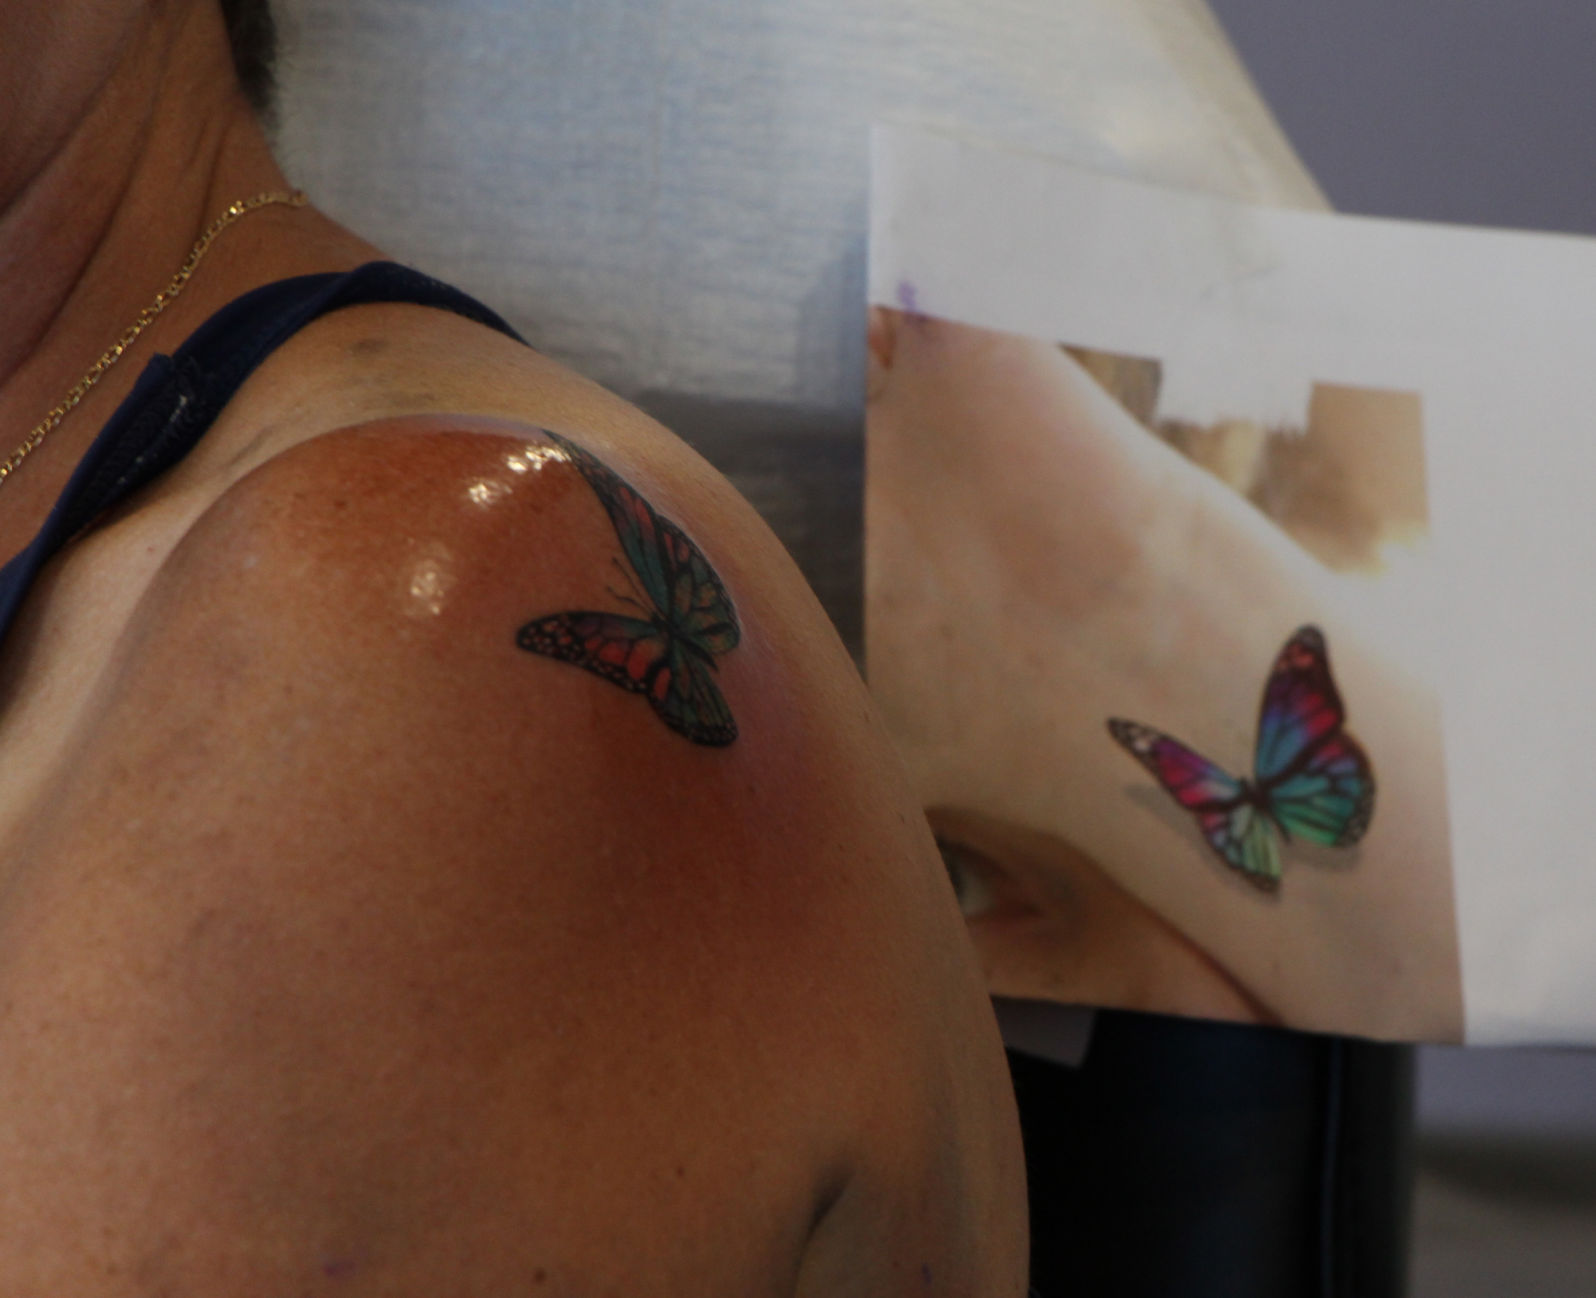 Details more than 58 sierra ferrell tattoos best  thtantai2